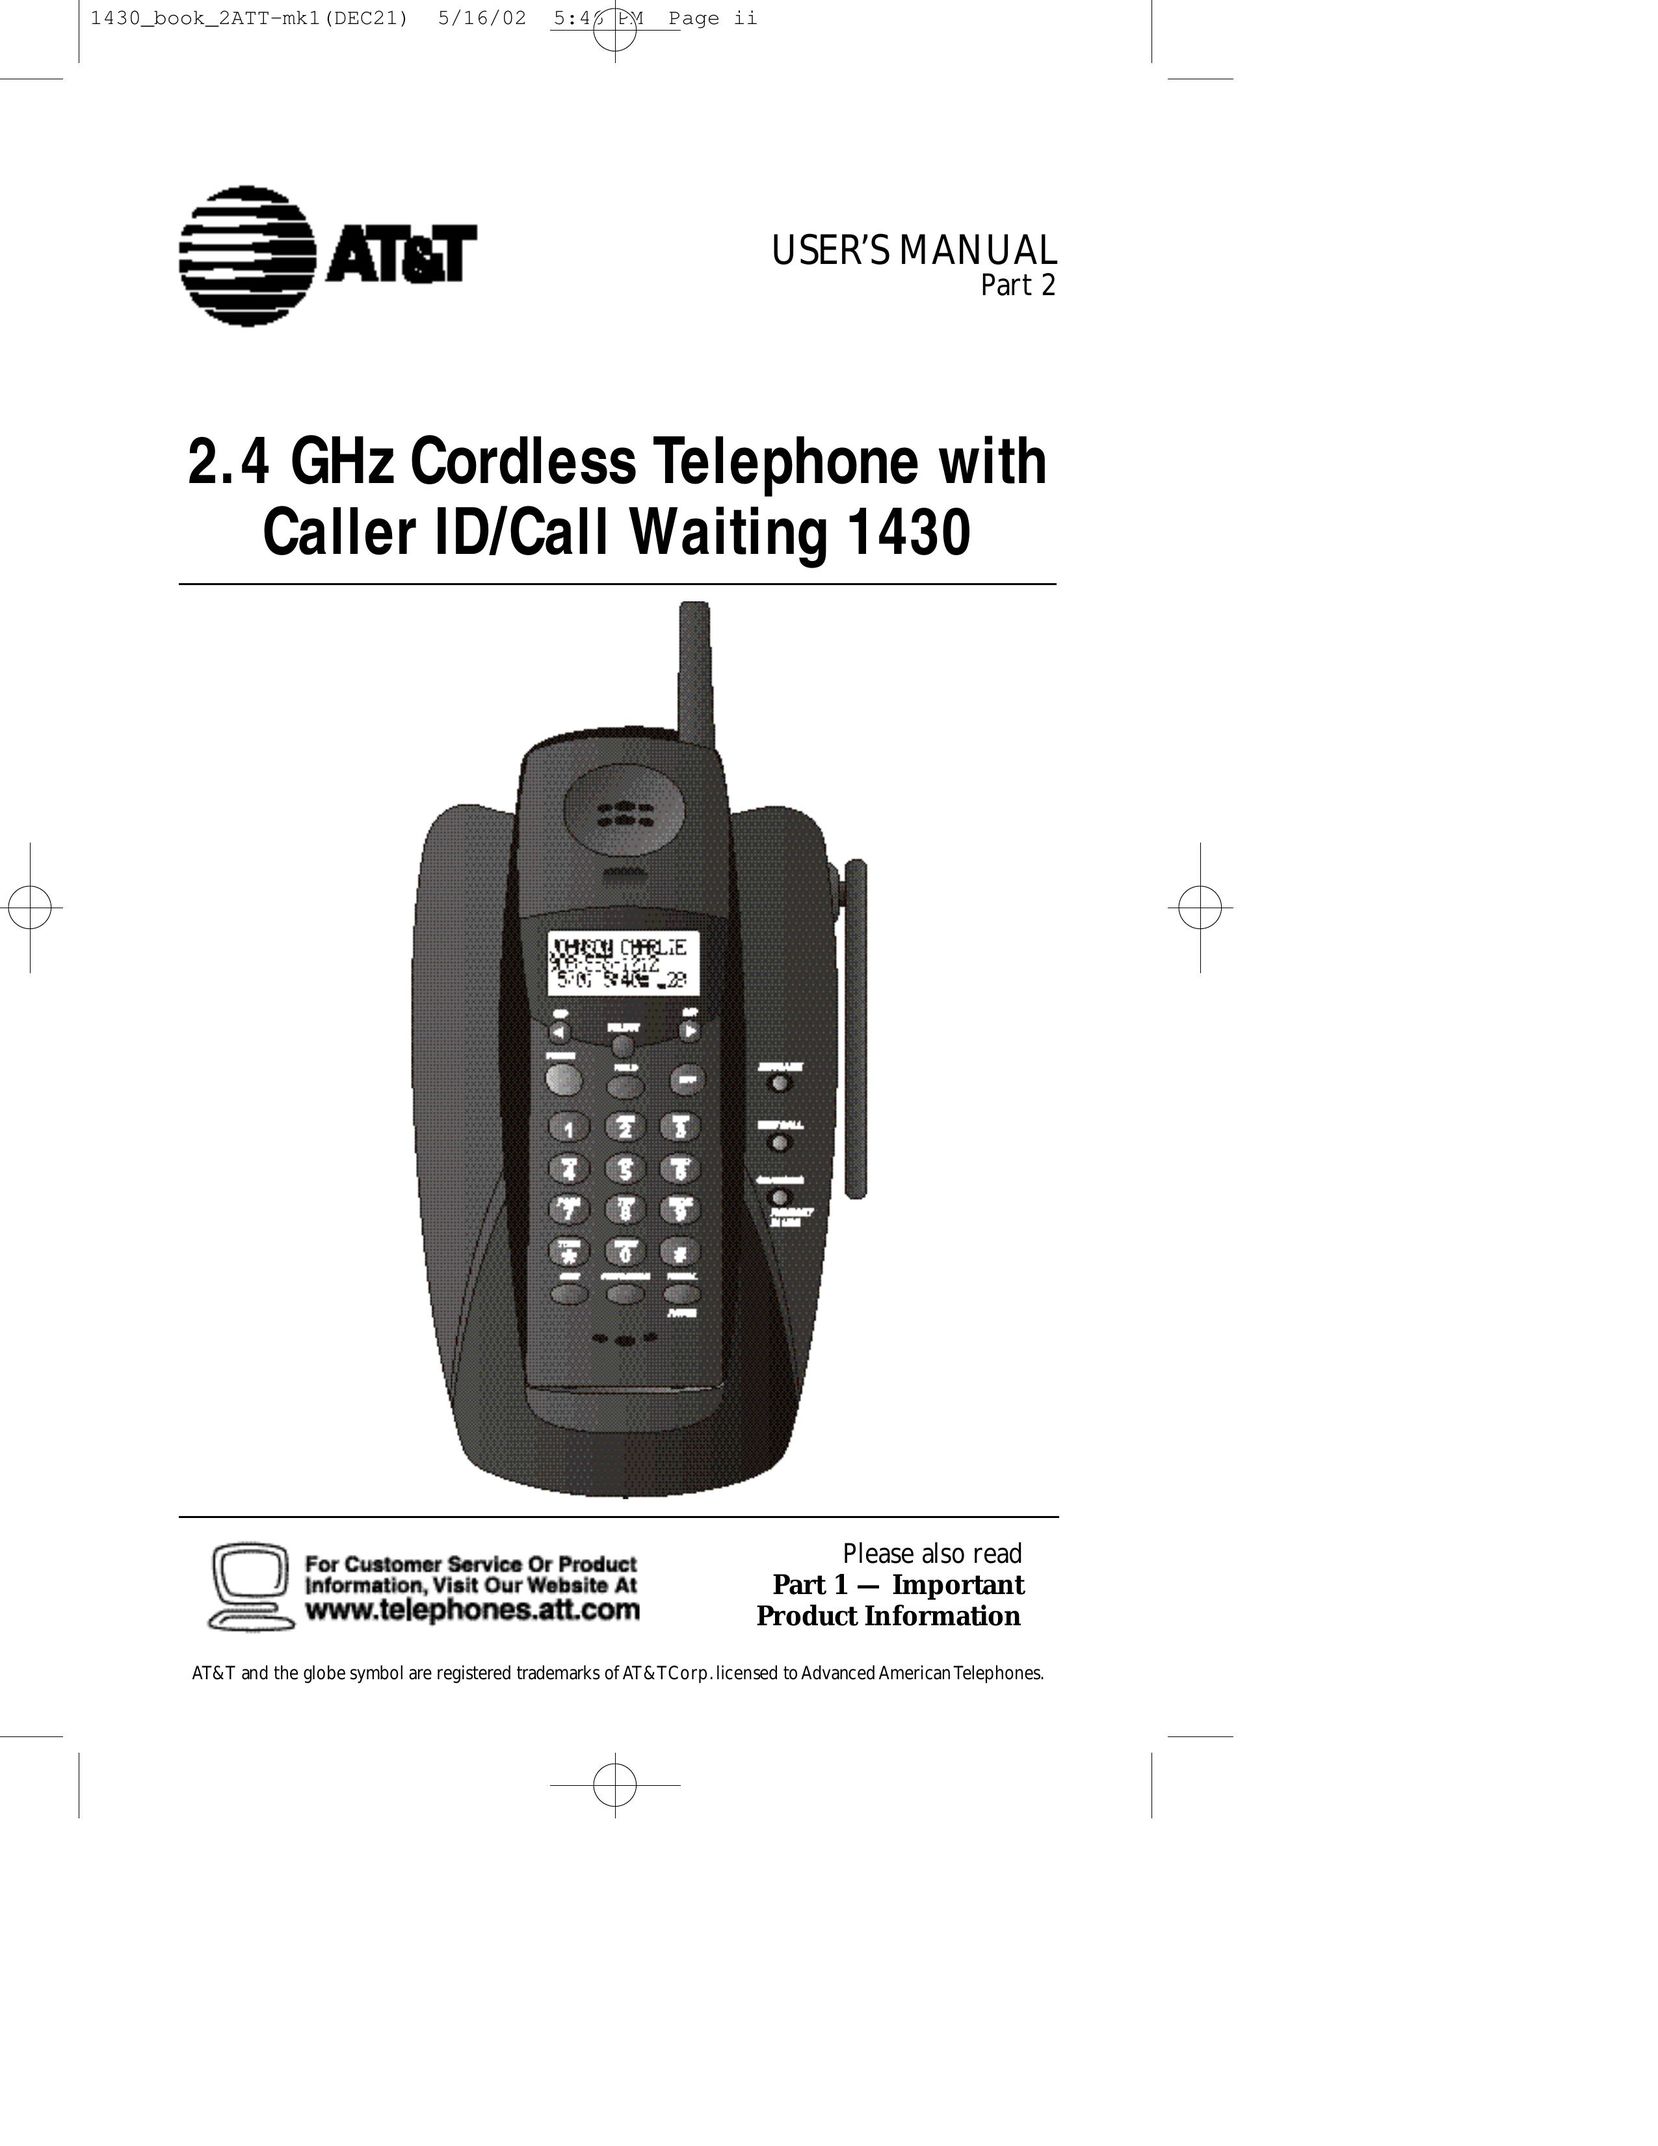 AT&T 1430 Cordless Telephone User Manual